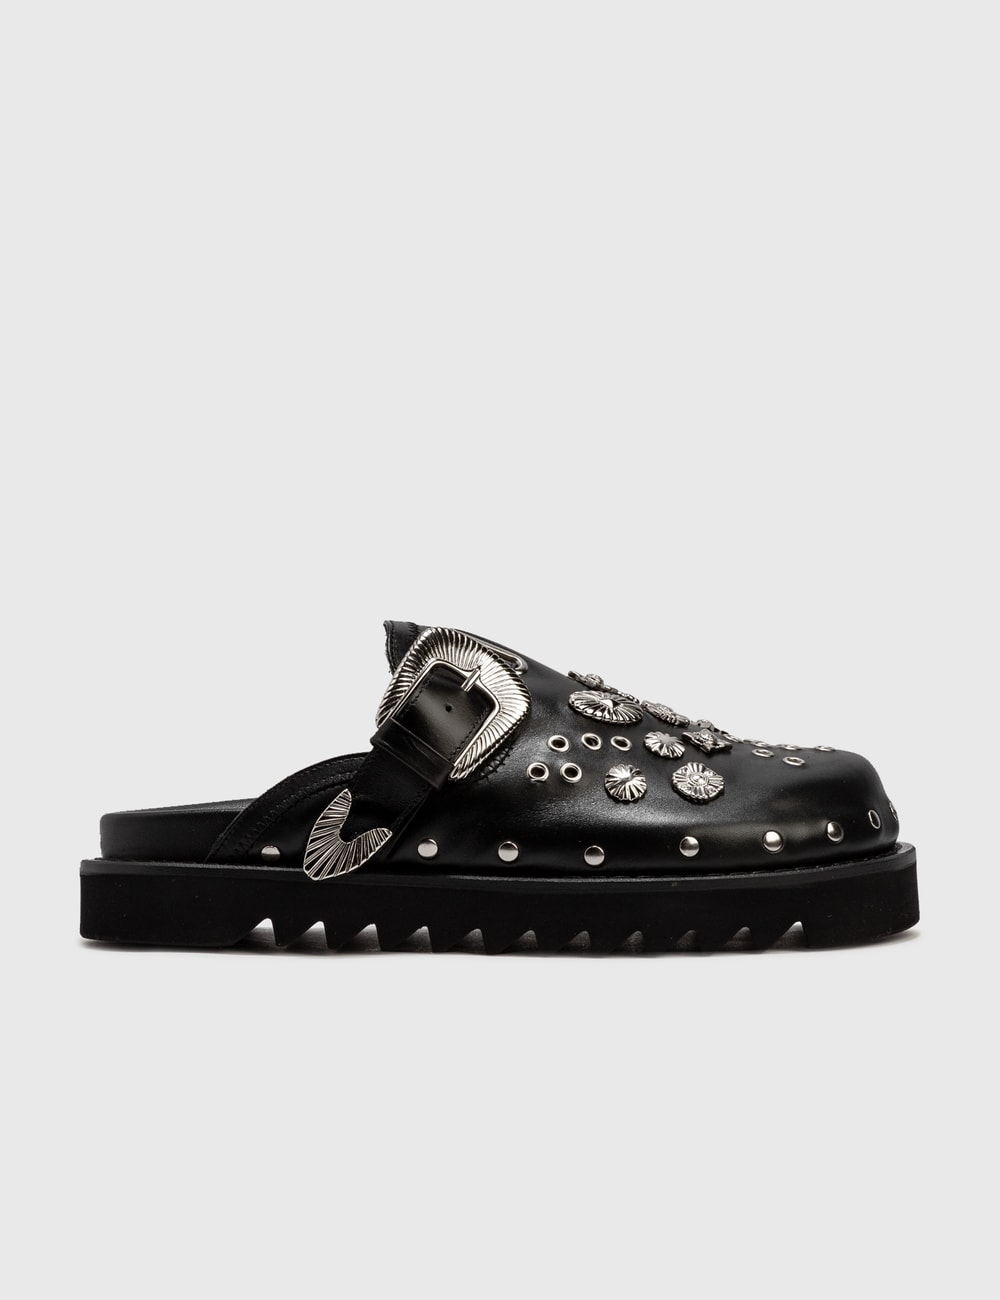 Toga Virilis - Studded Leather Slip On Sandals | HBX